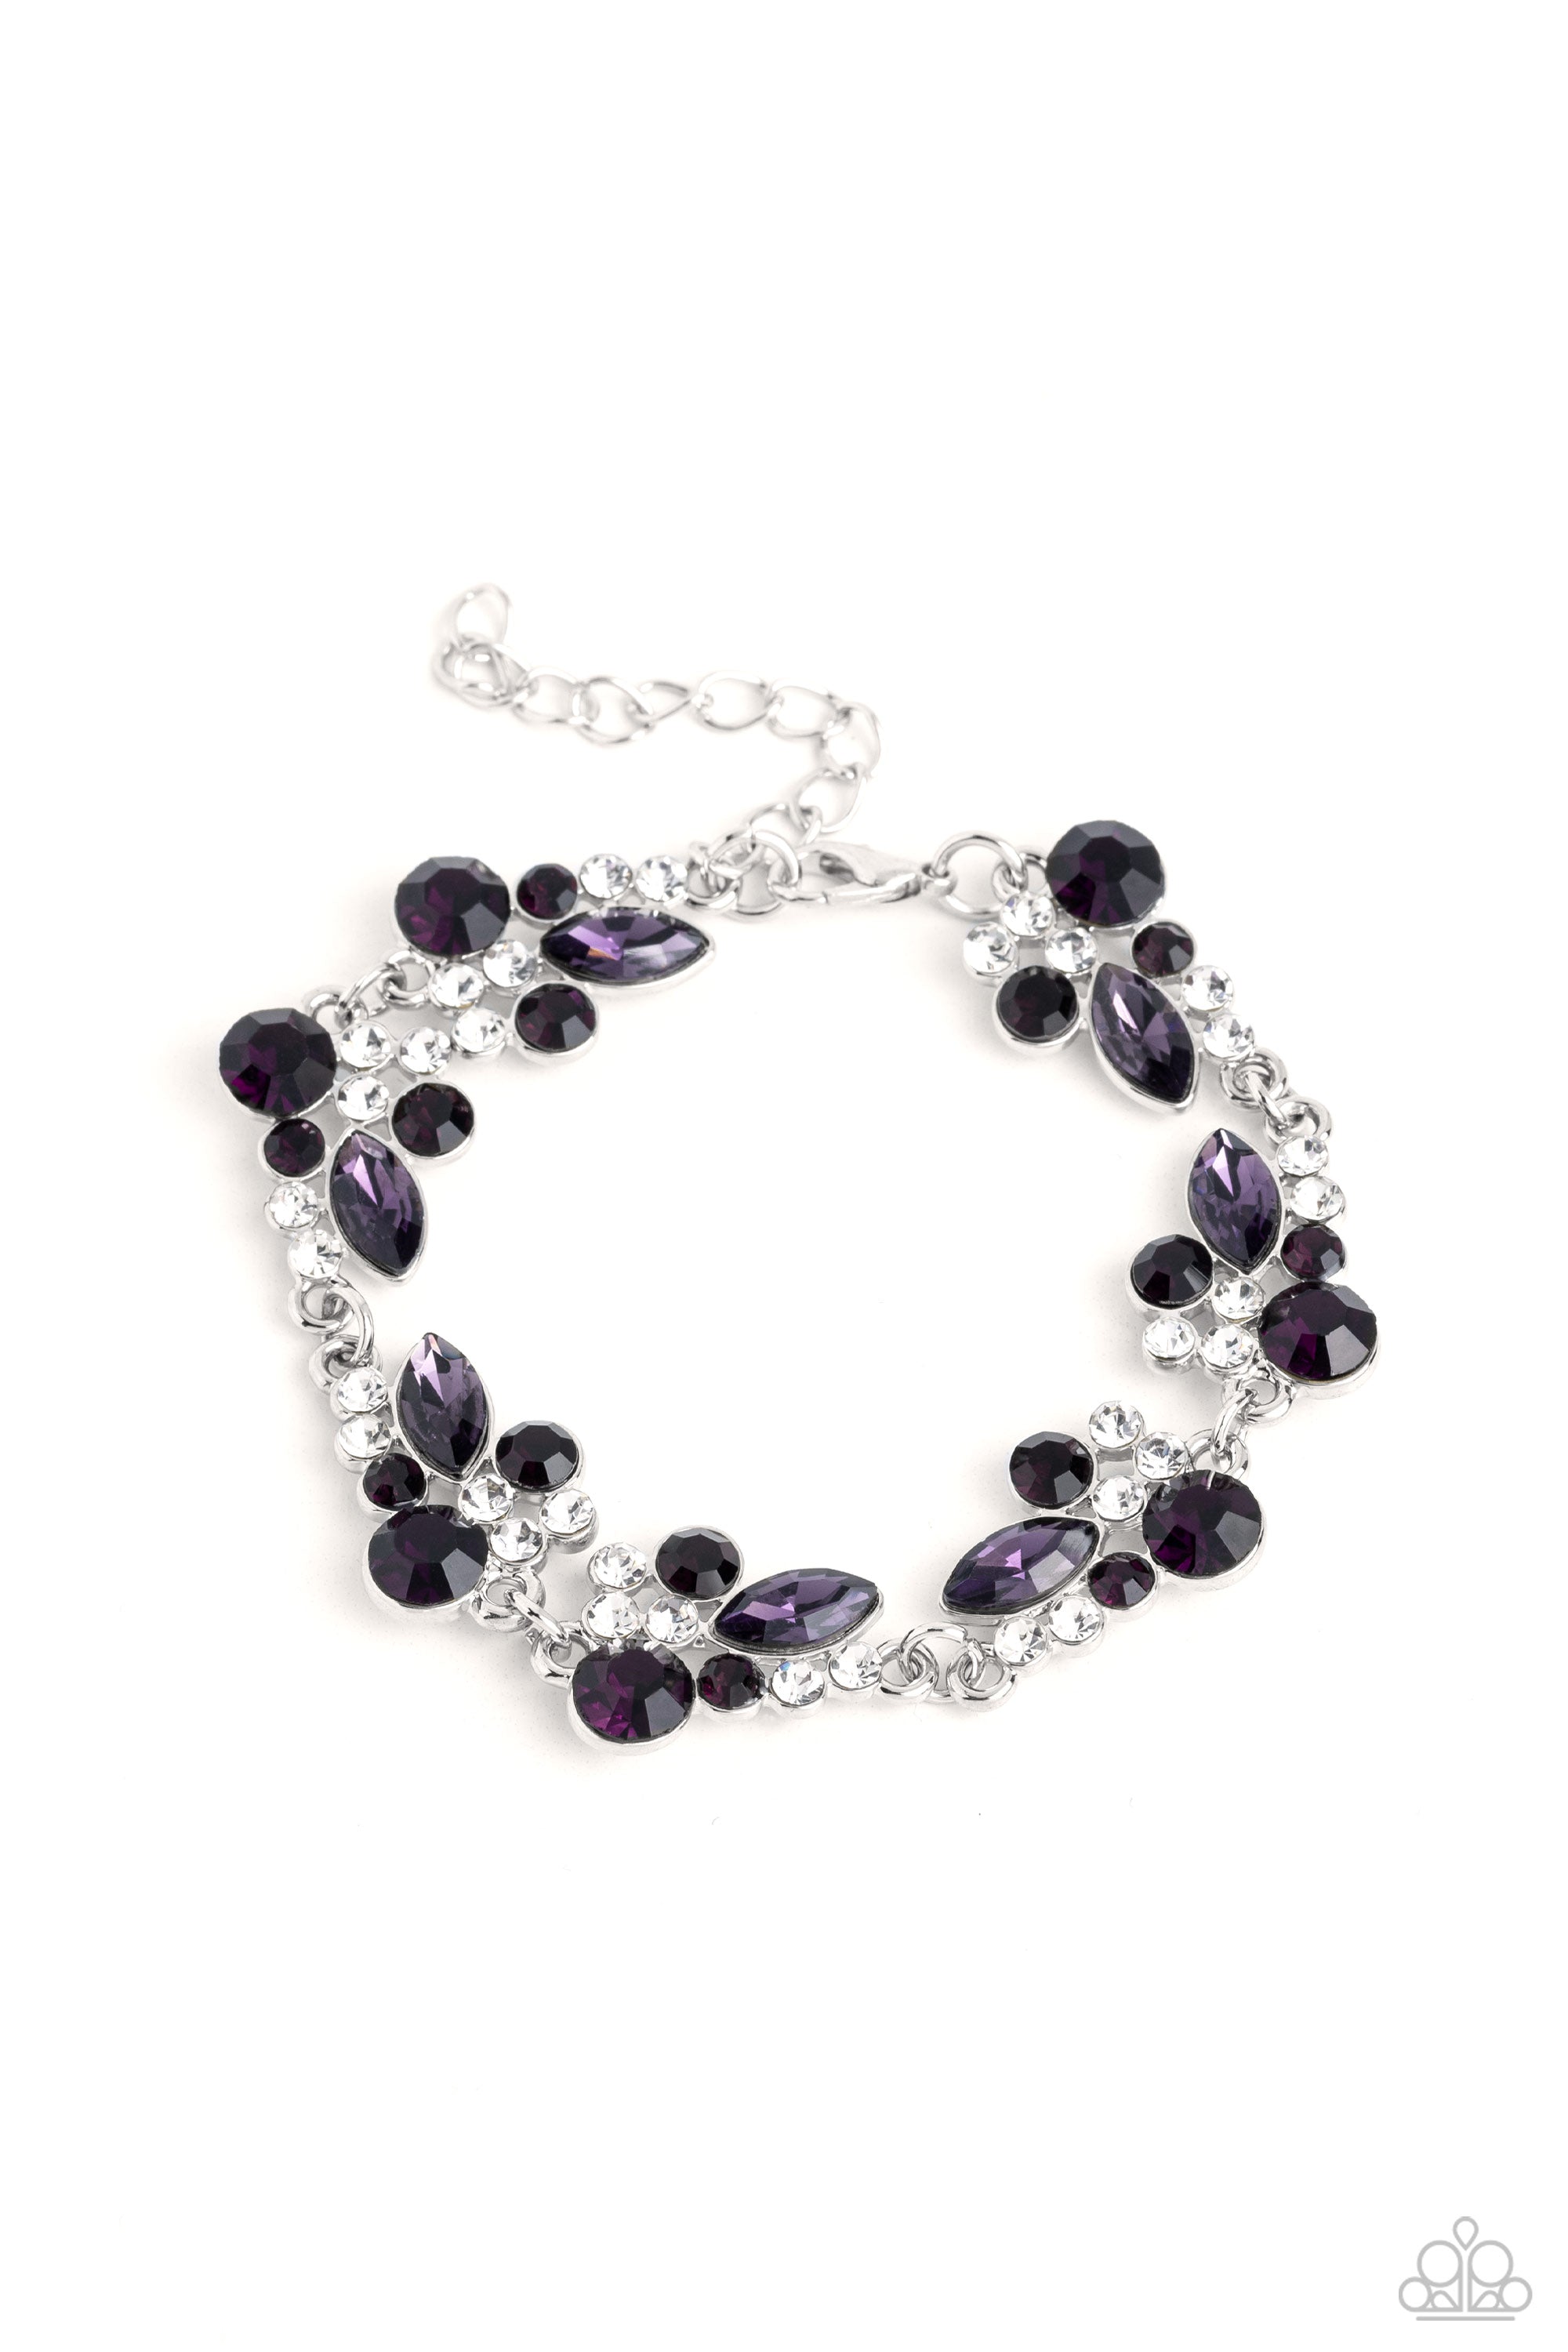 Poolside Perfection Purple Rhinestone Bracelet - Paparazzi Accessories- lightbox - CarasShop.com - $5 Jewelry by Cara Jewels